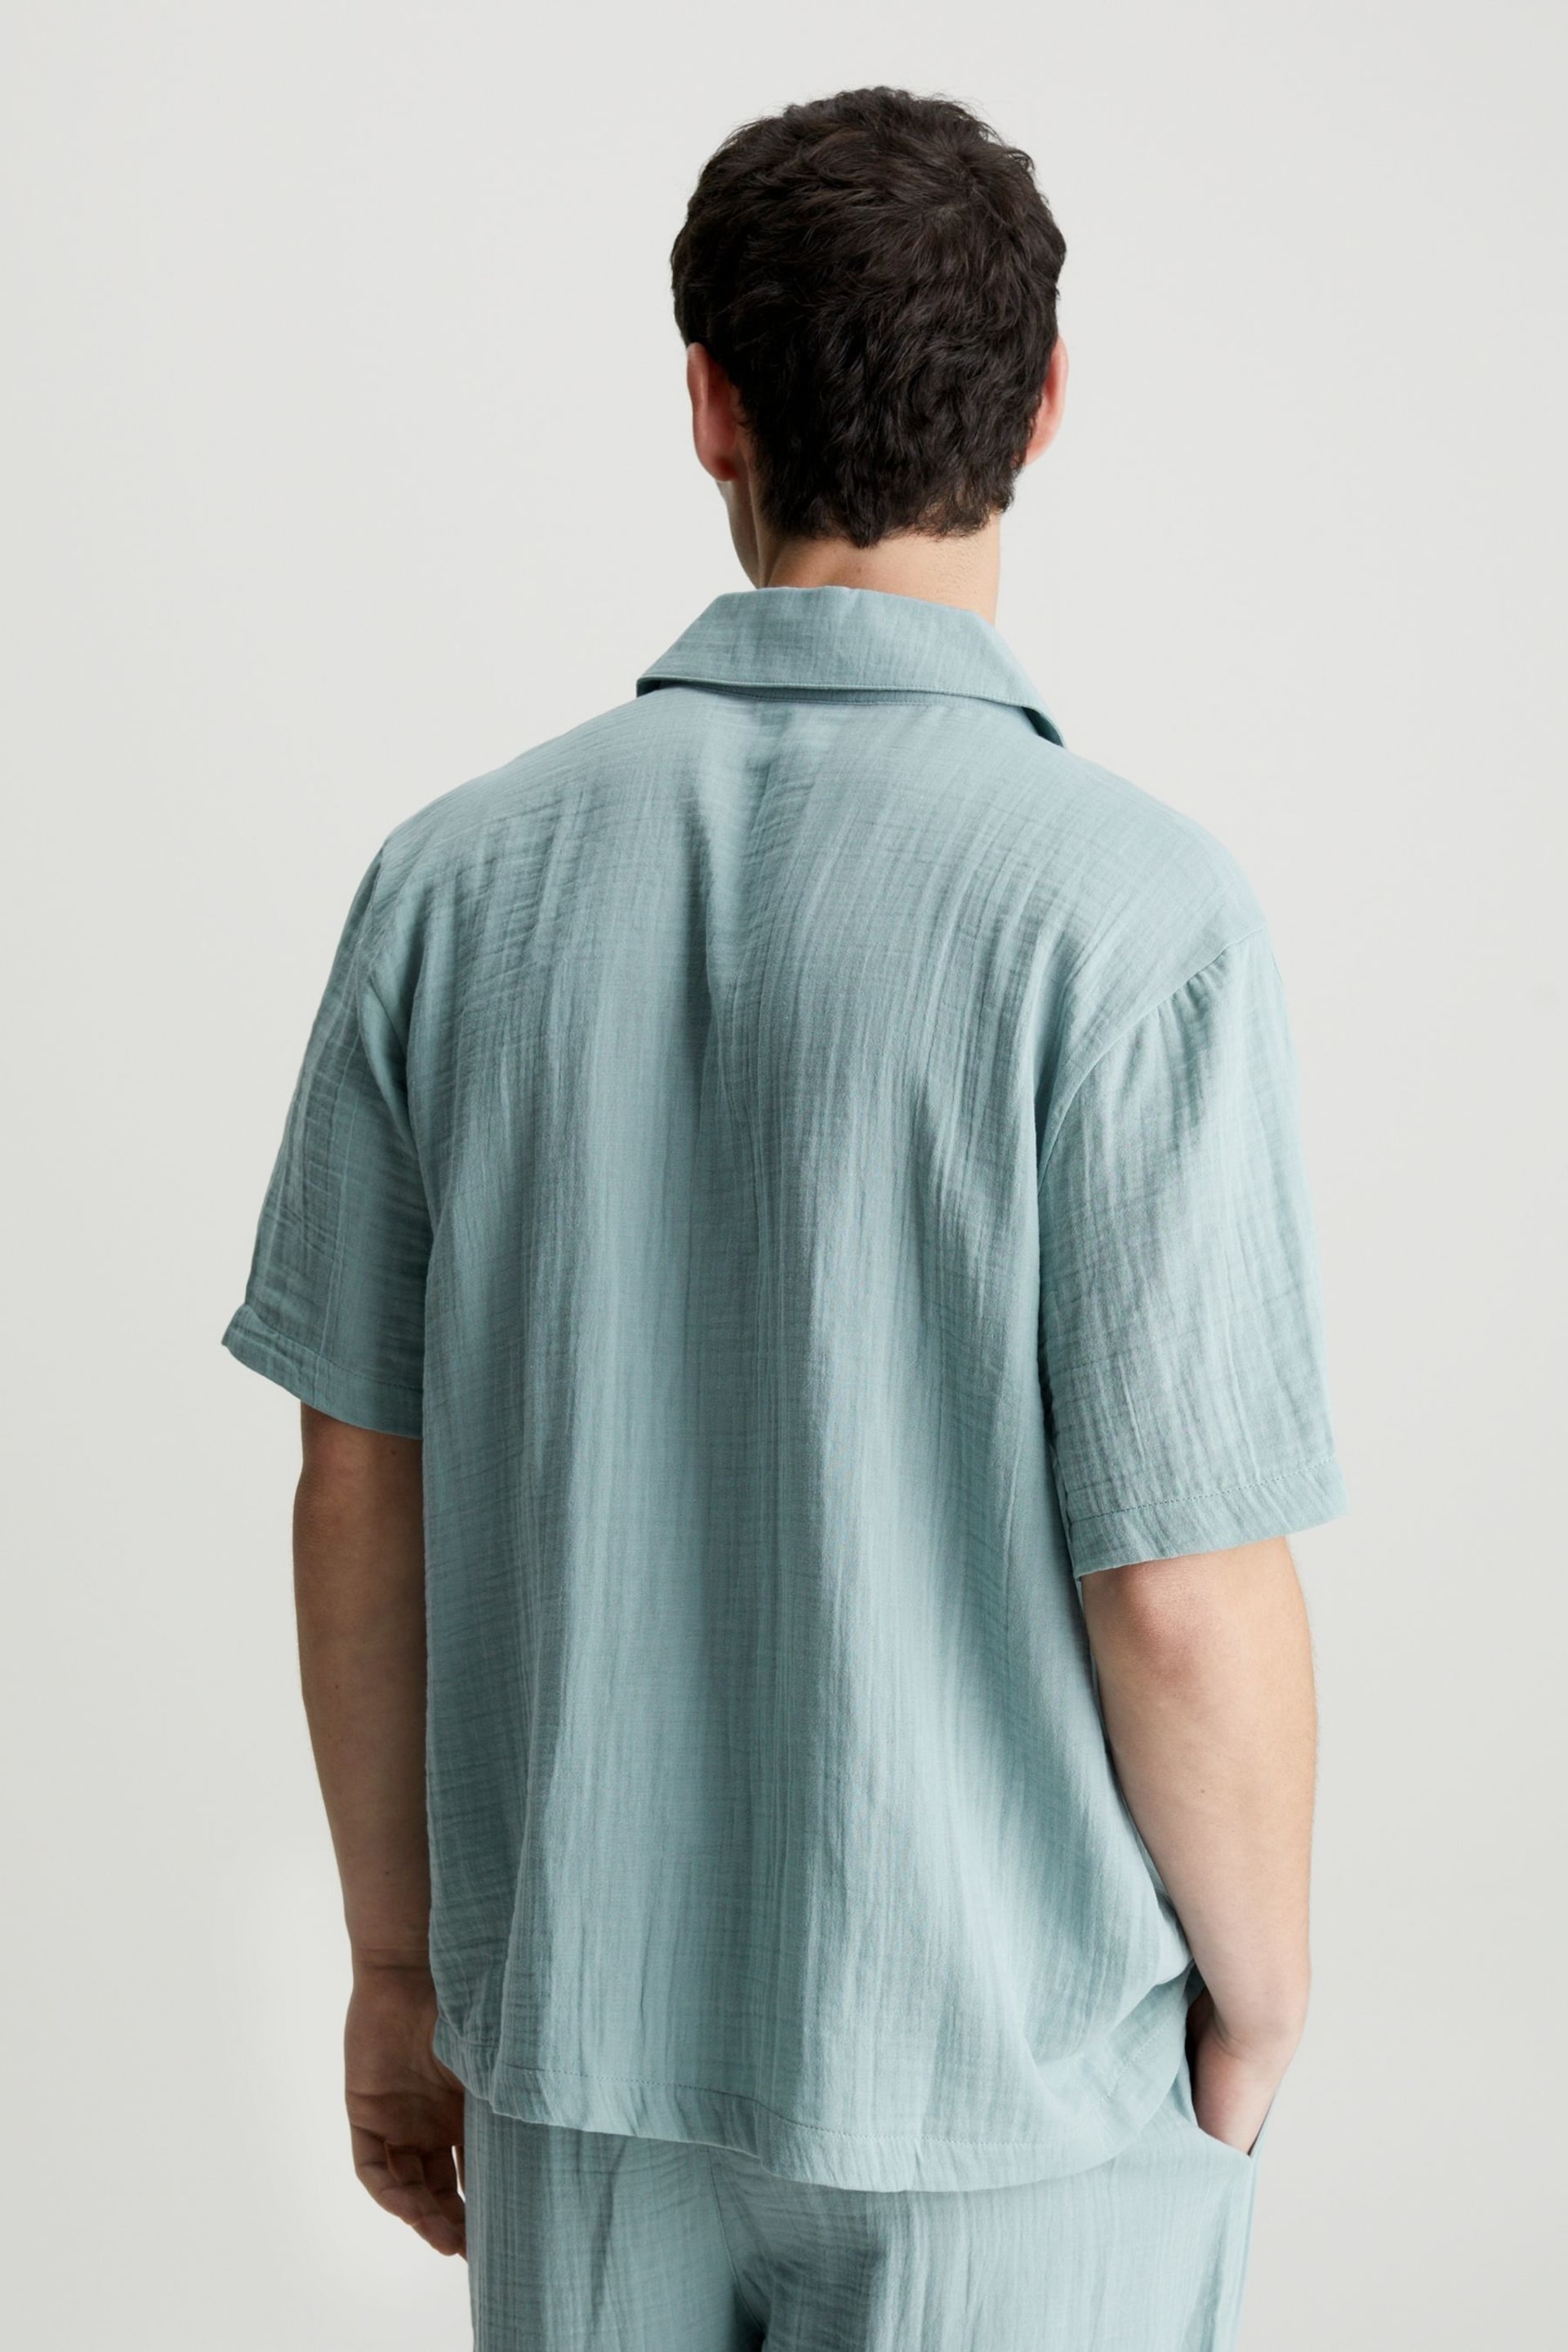 Calvin Klein Blue Plain Button Down Shirt - Image 2 of 4